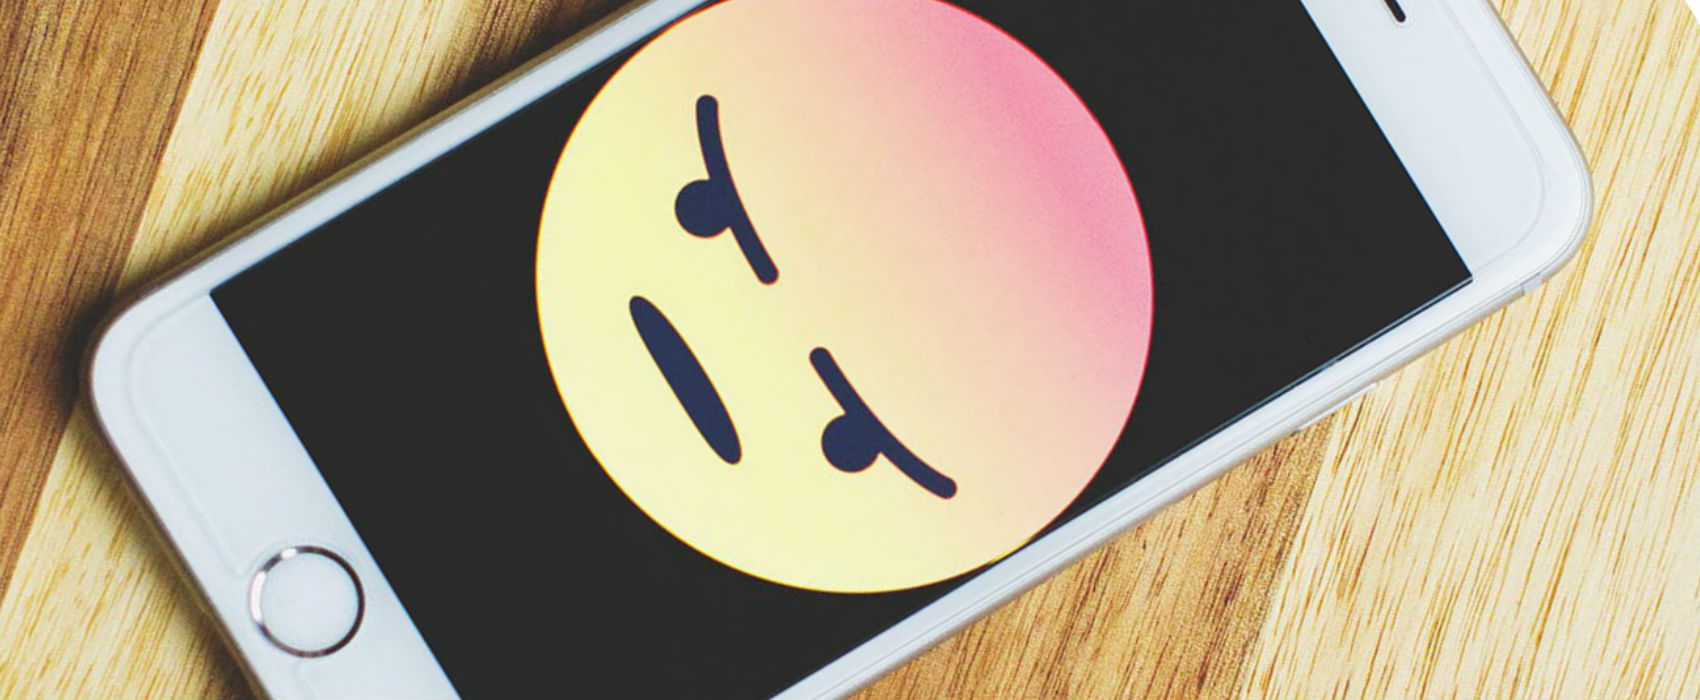 angry emoji on smartphone